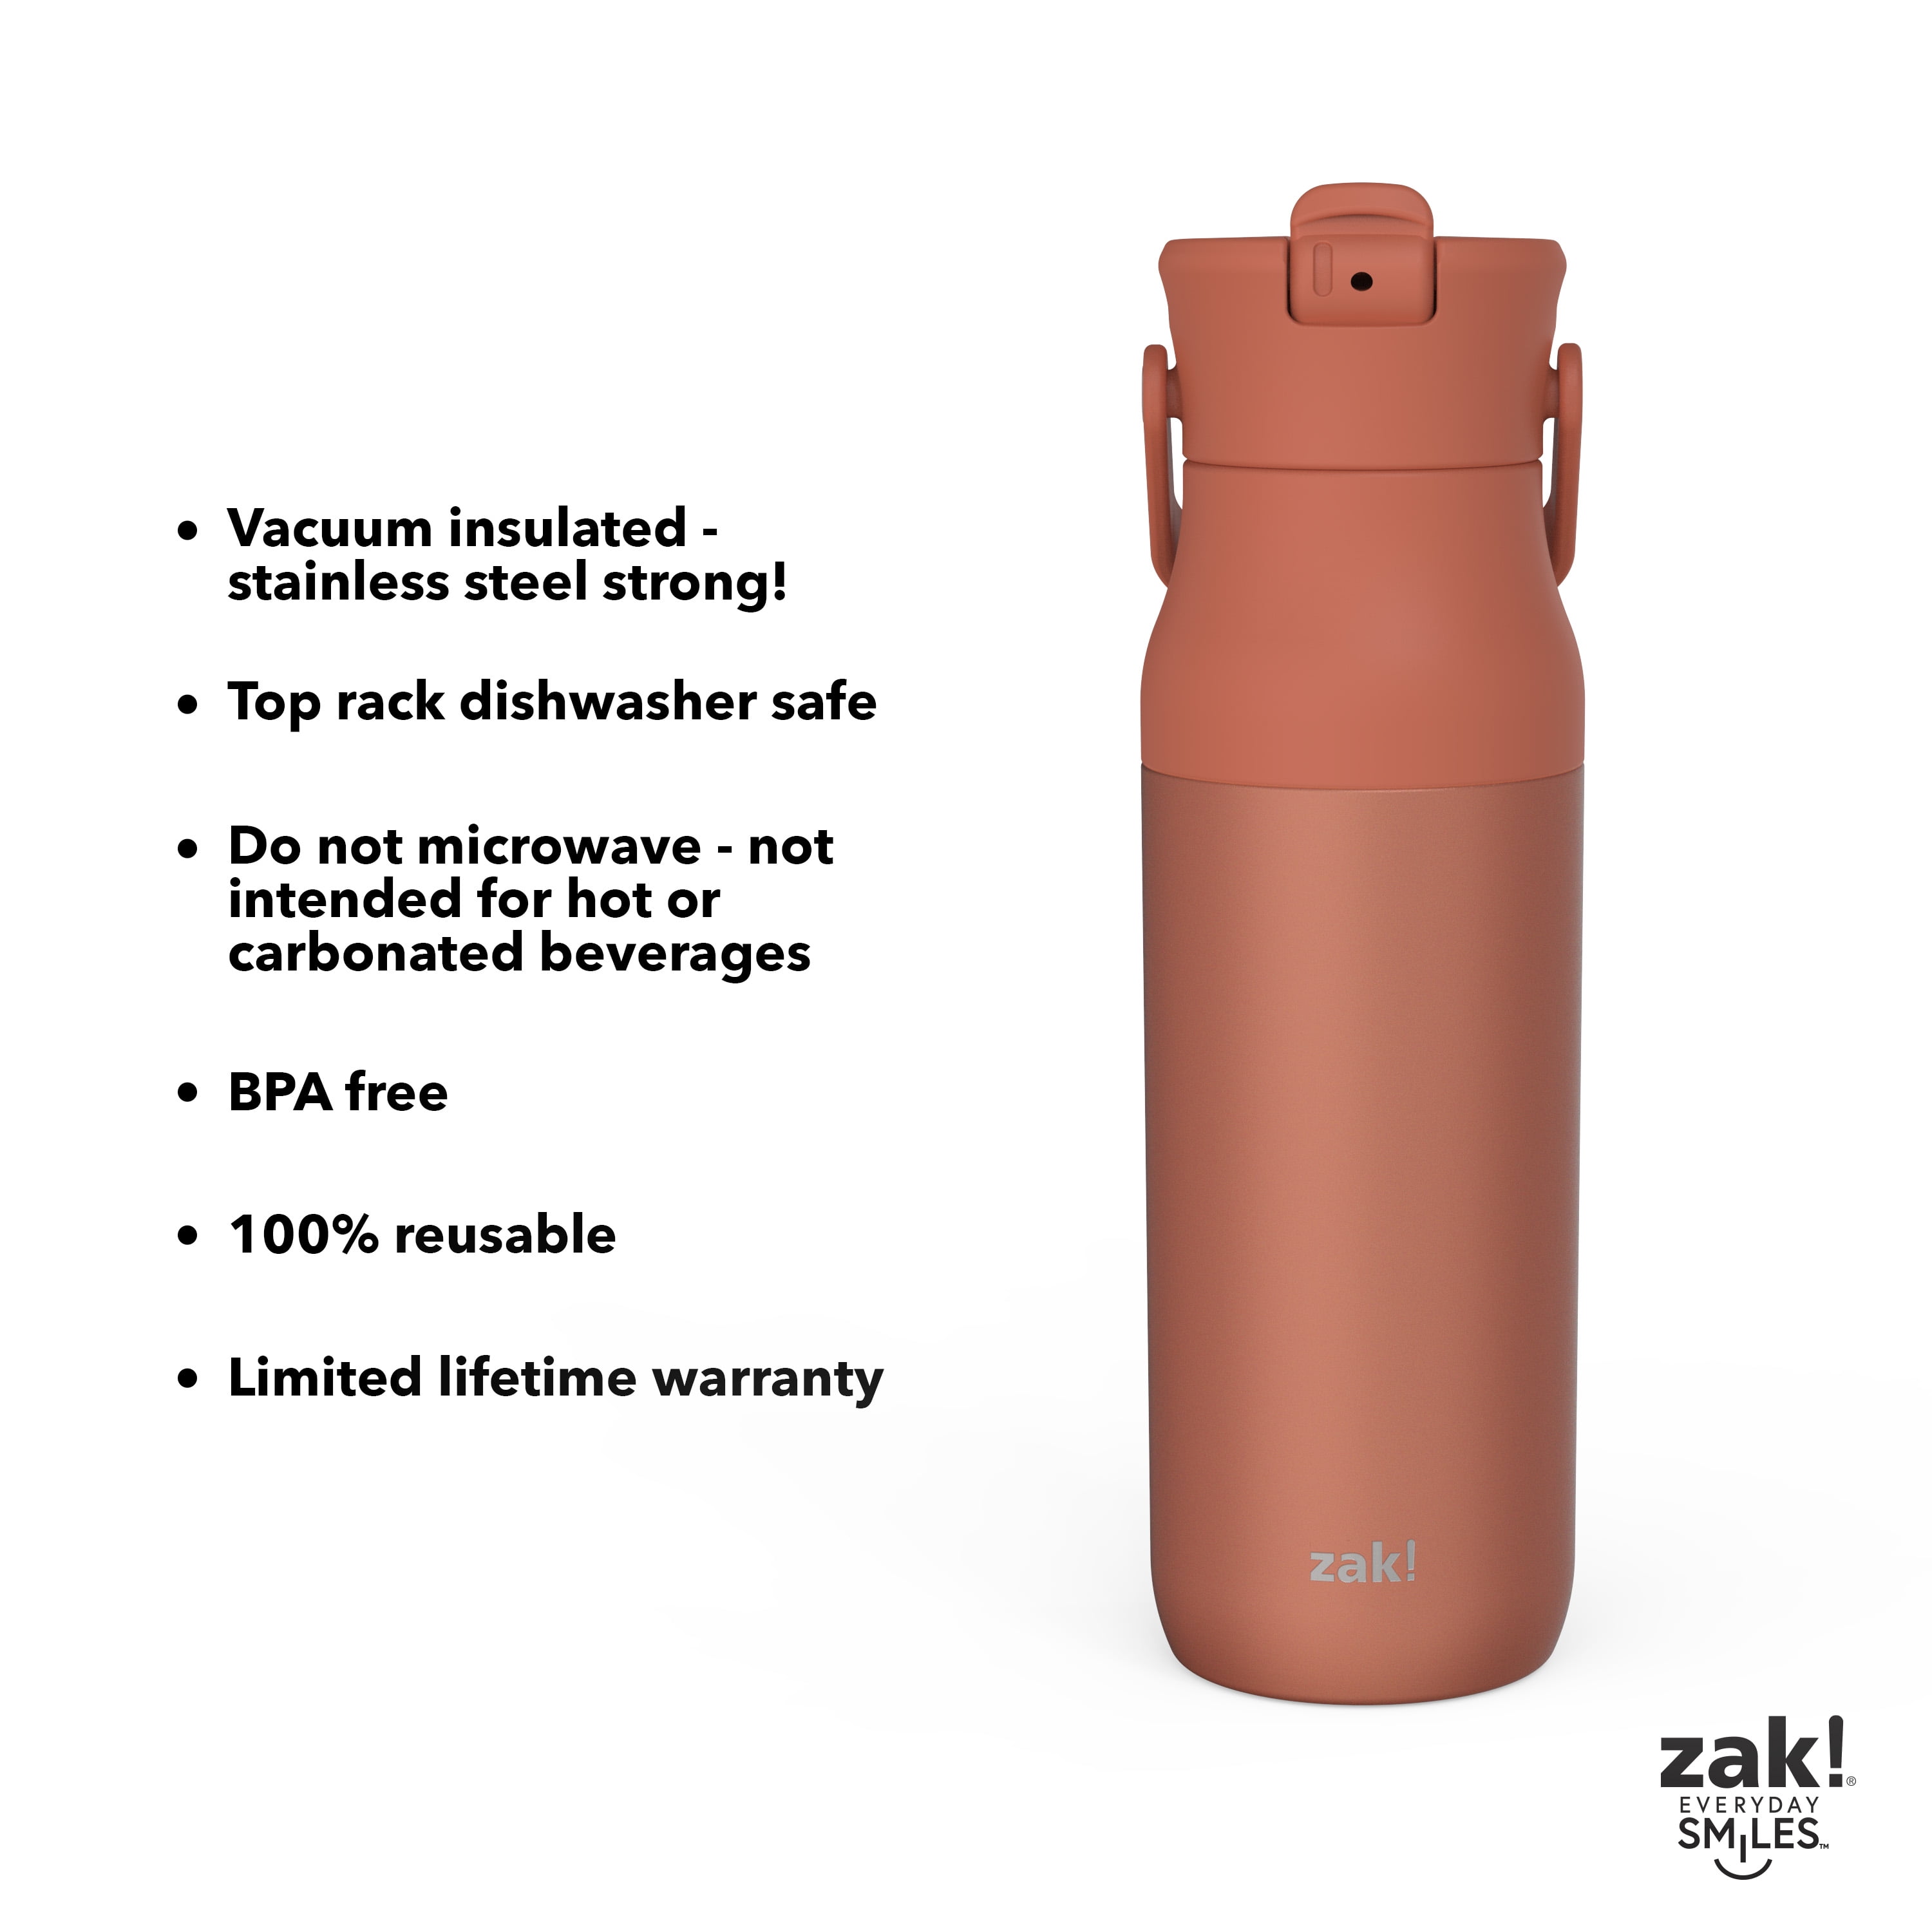 Zak Designs 32oz Stainless Steel Double Wall Liberty Straw Water Bottle  (Purple)